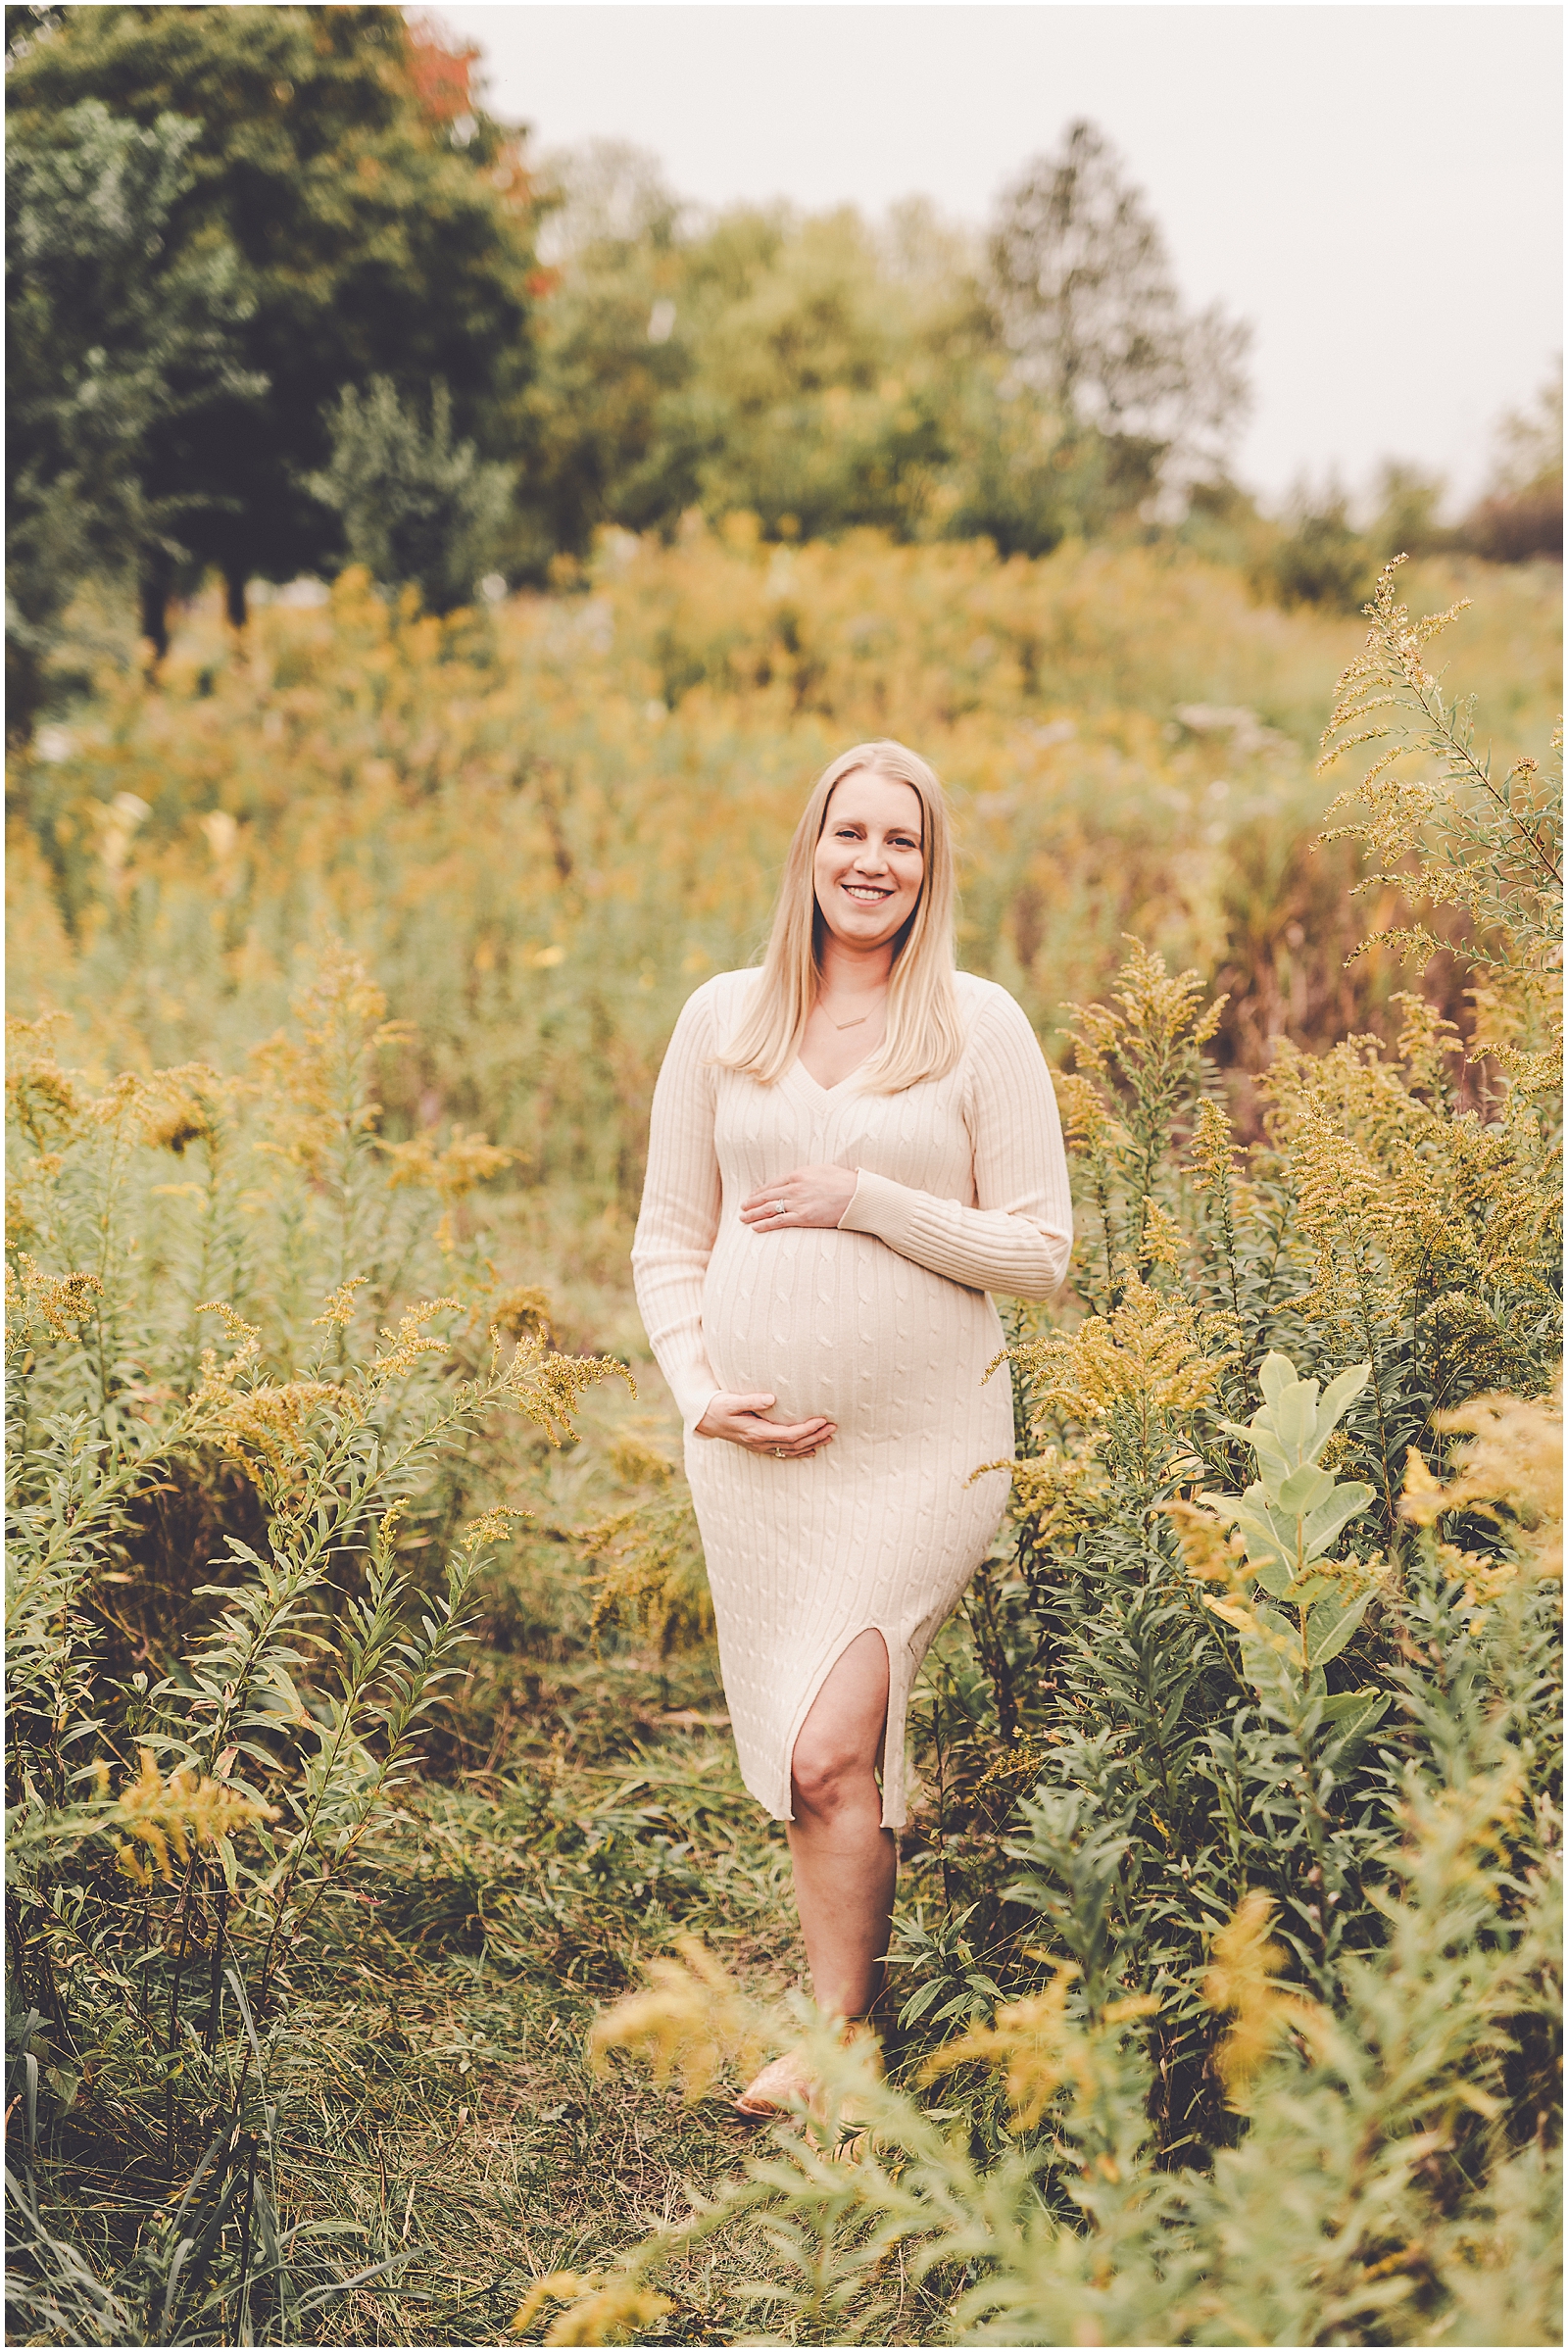 Fall maternity session in Bourbonnais, Illinois with Kankakee County family photographer Kara Evans Photographer.